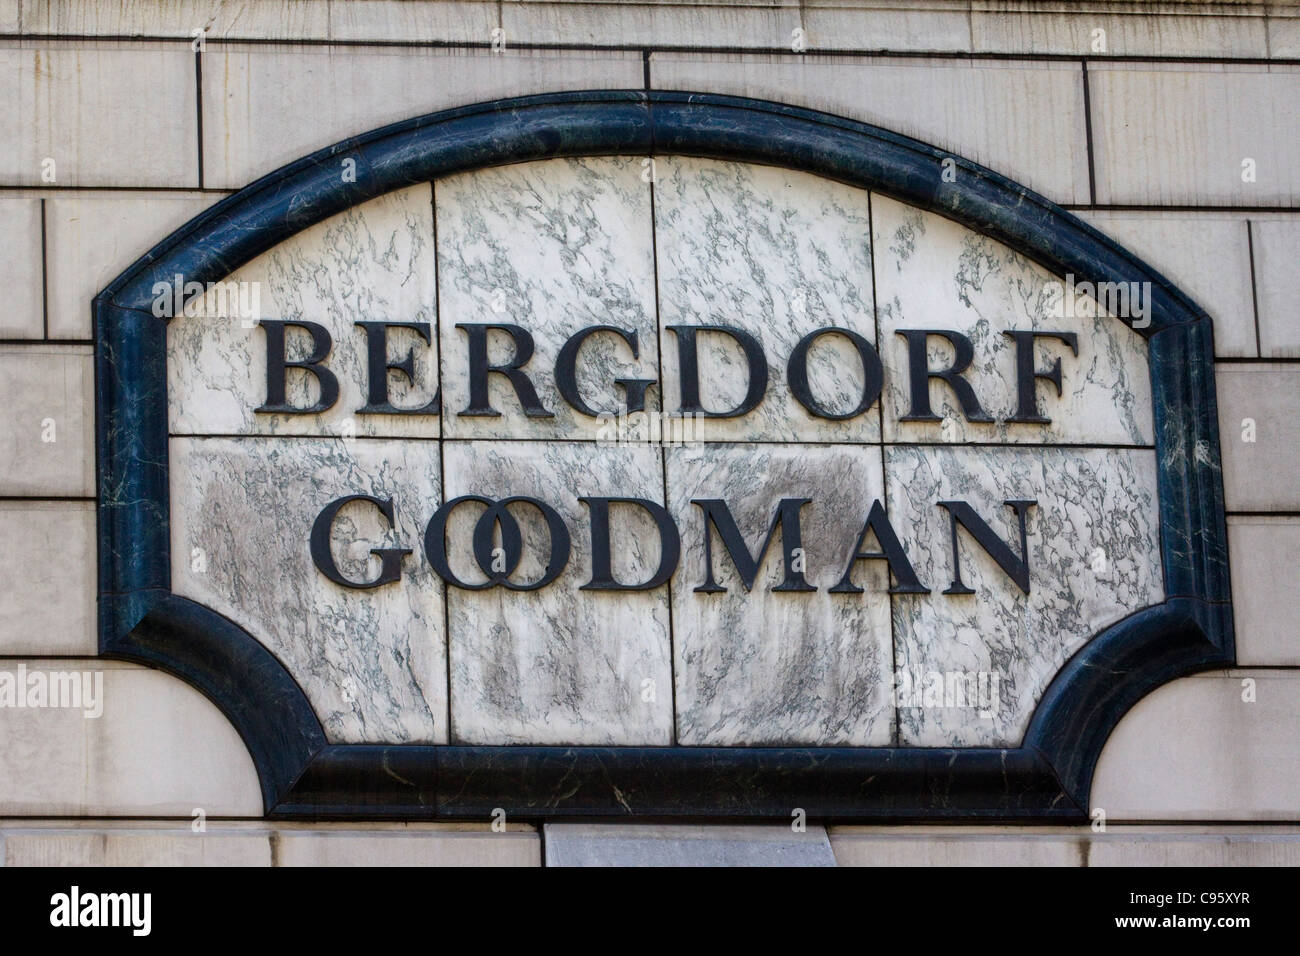 bergdorf goodman logo